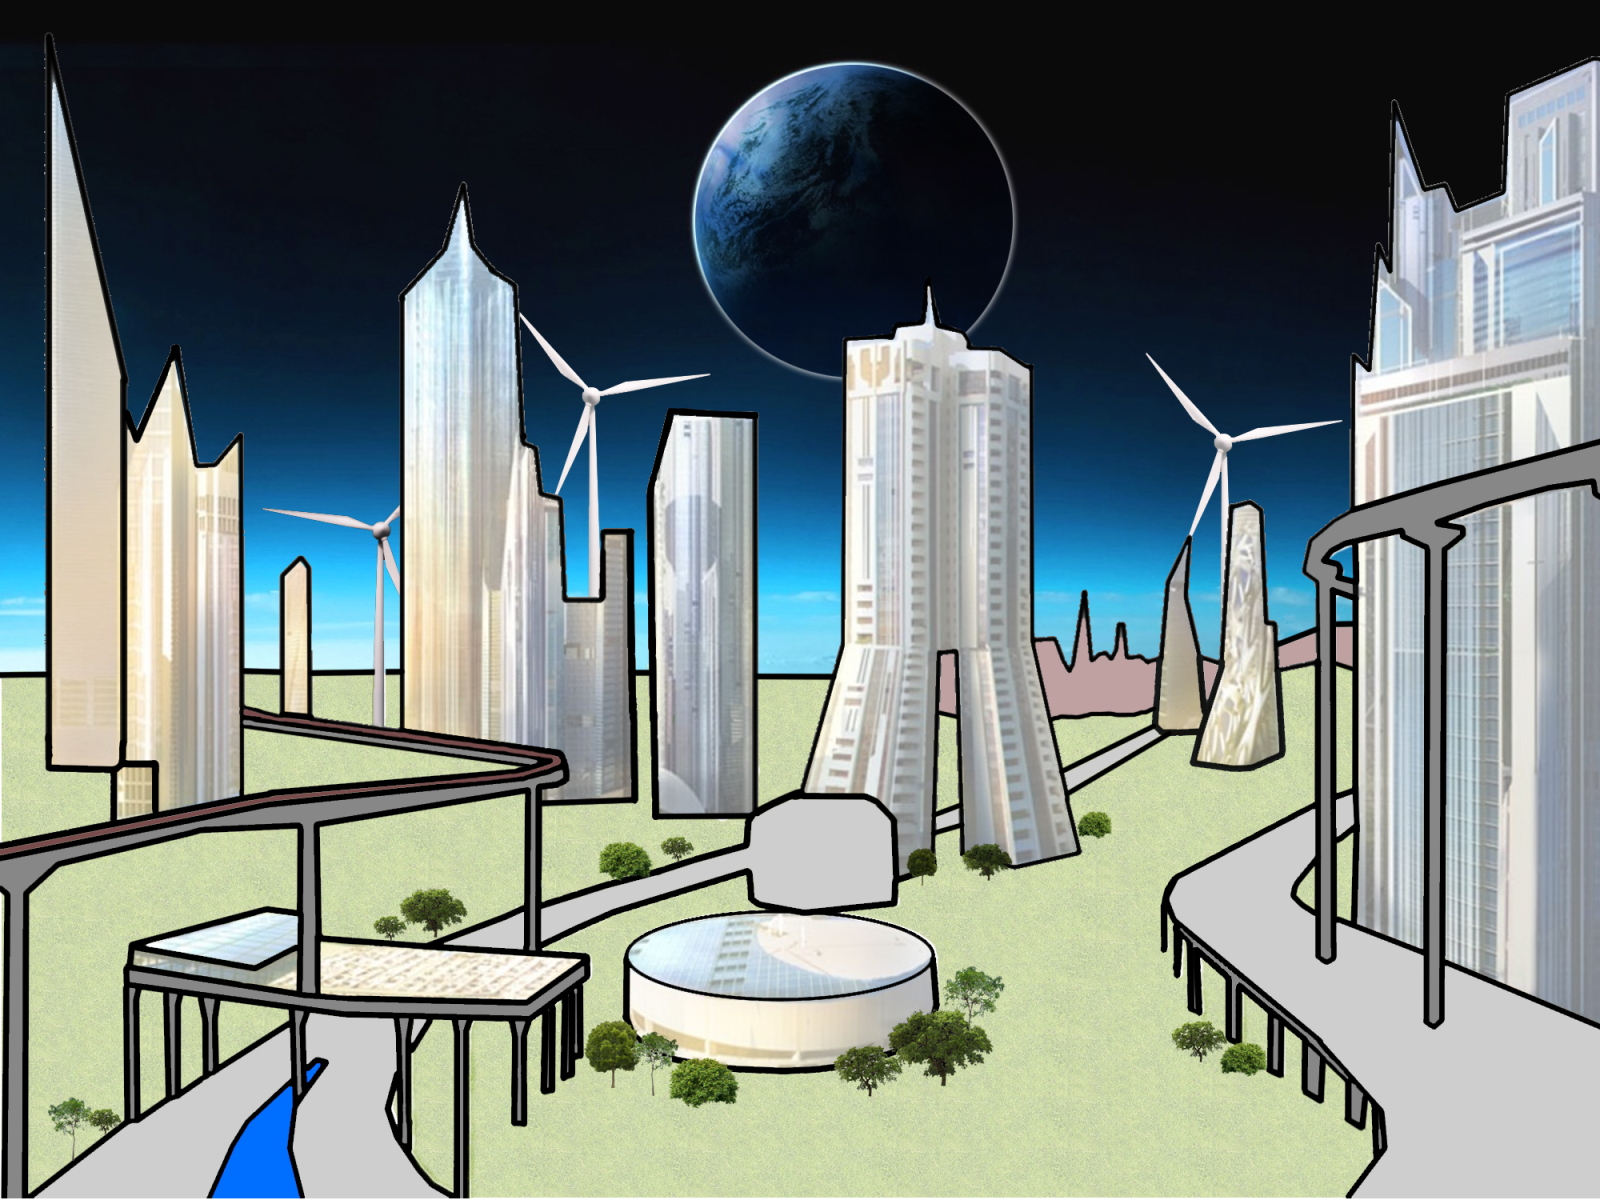 Future City Drawing by Luke on Dribbble